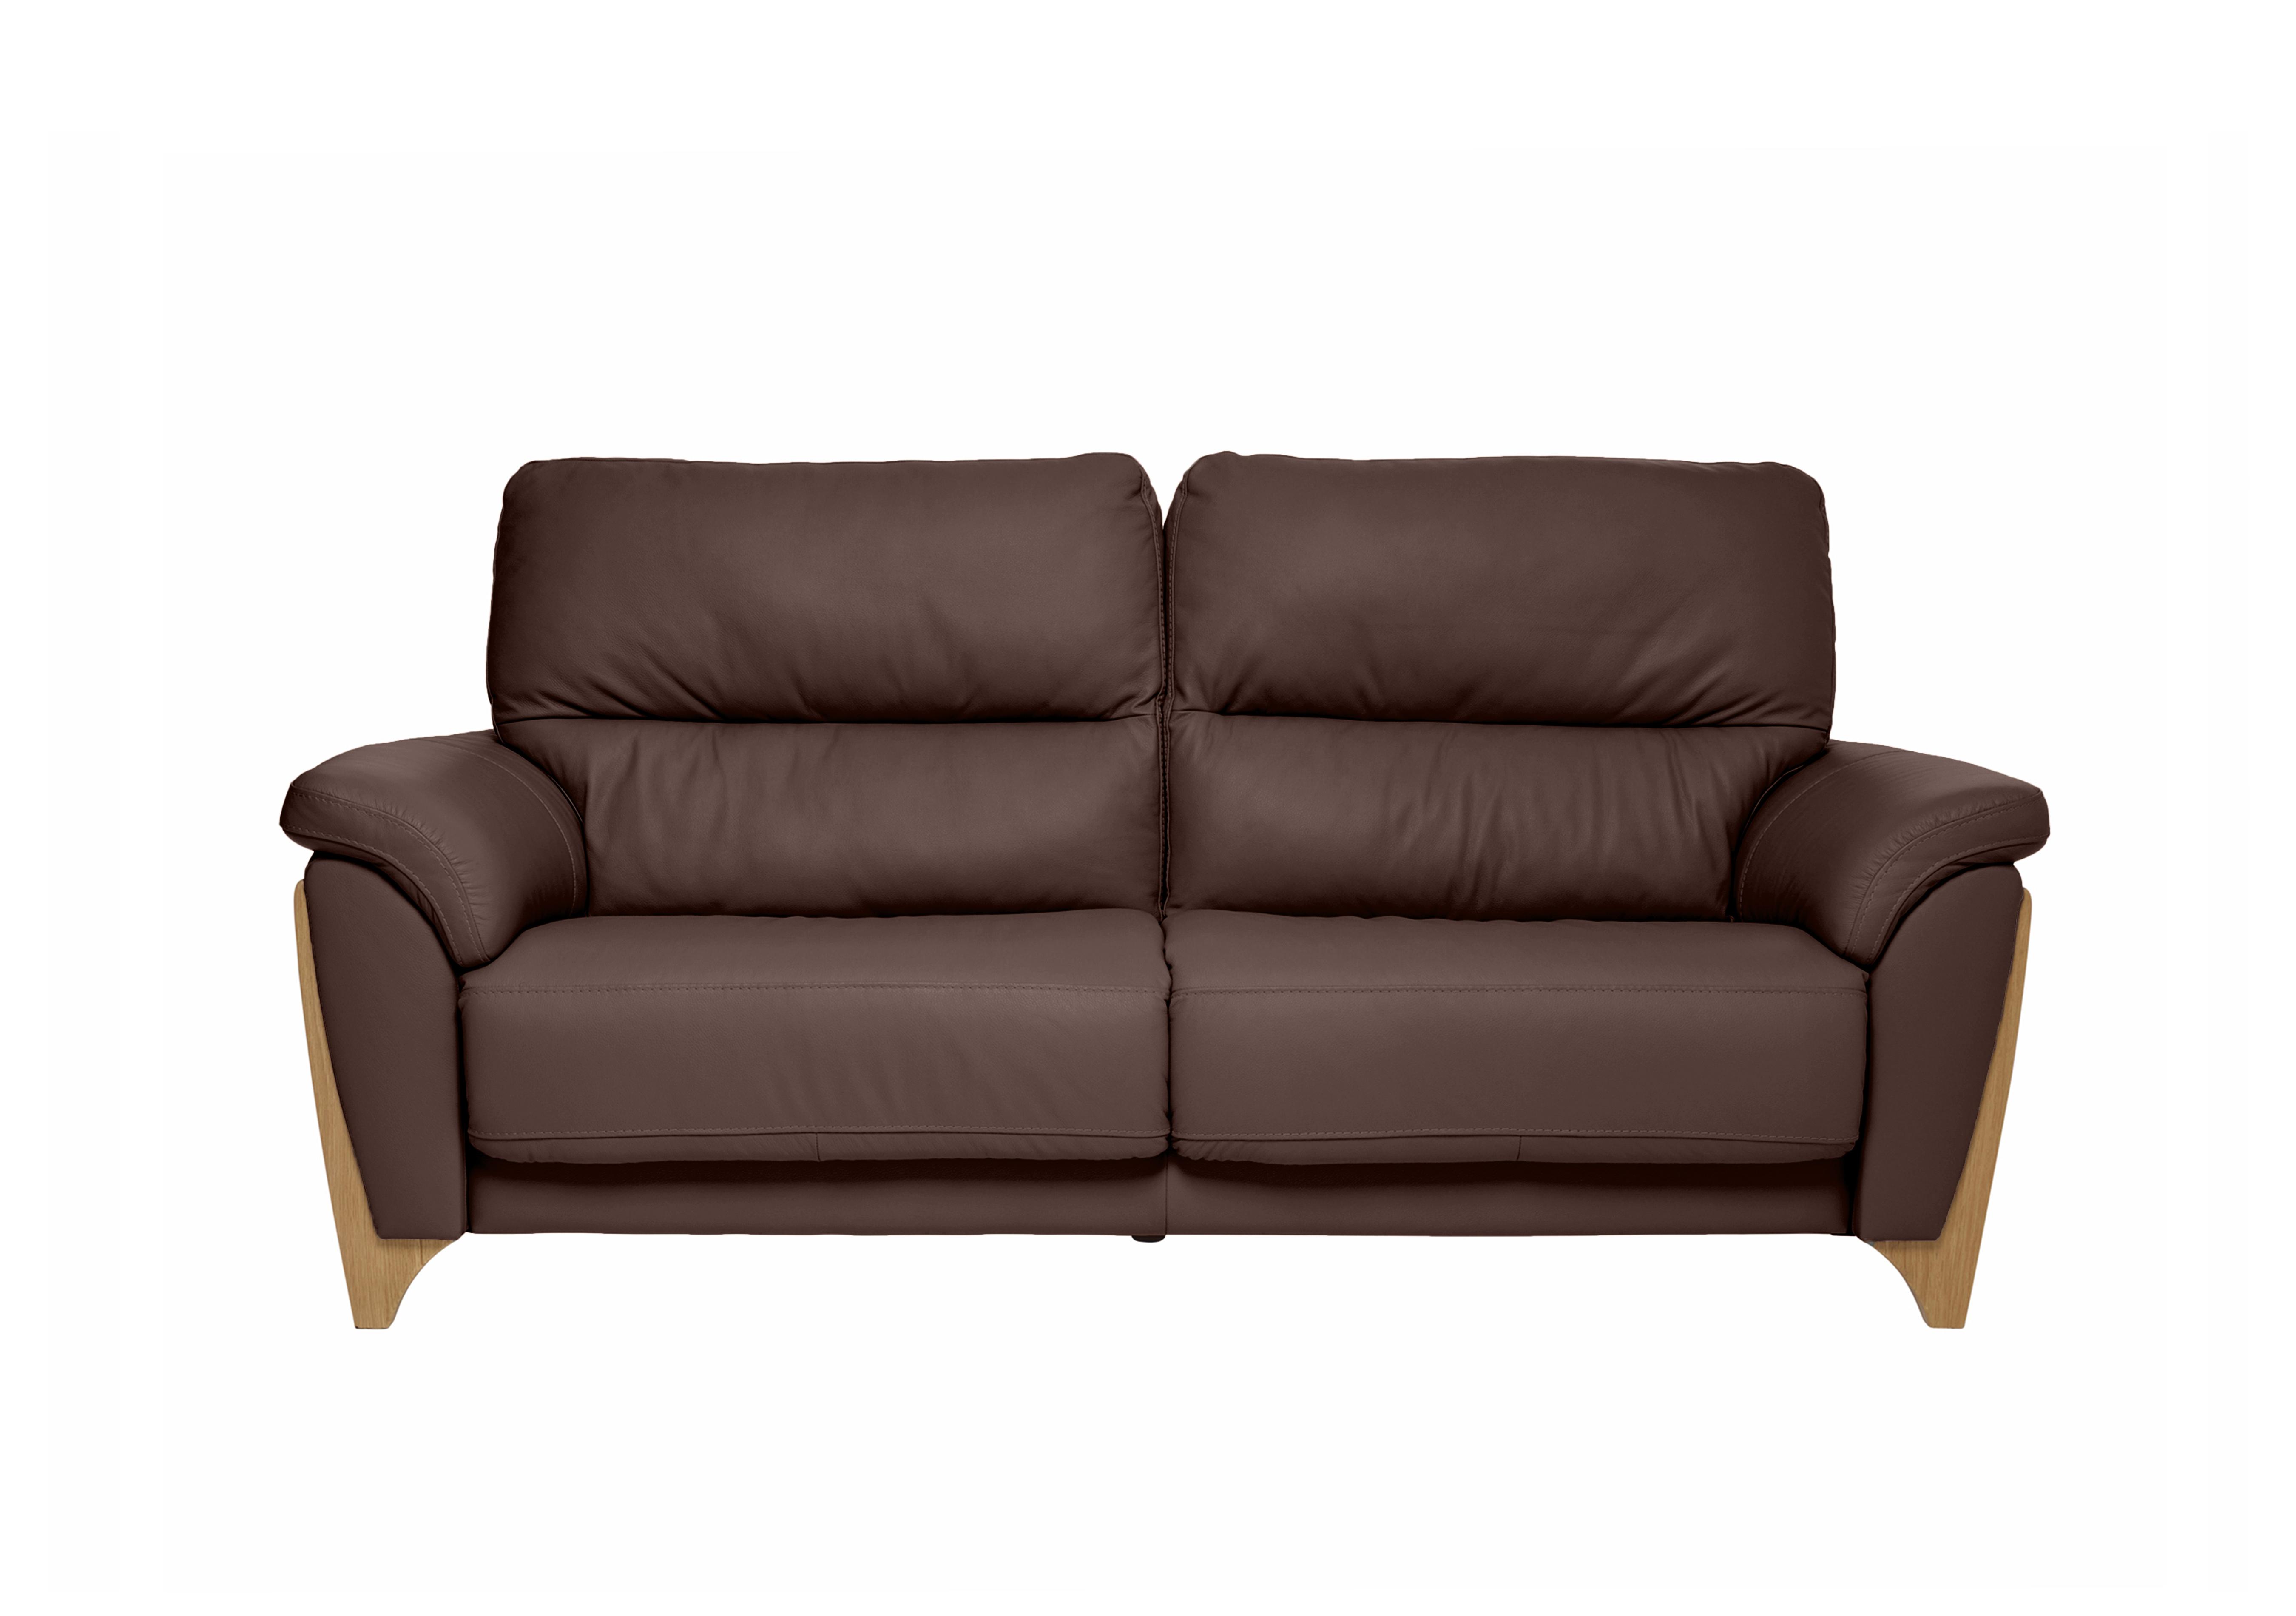 Enna Large Leather Sofa in L901 on Furniture Village